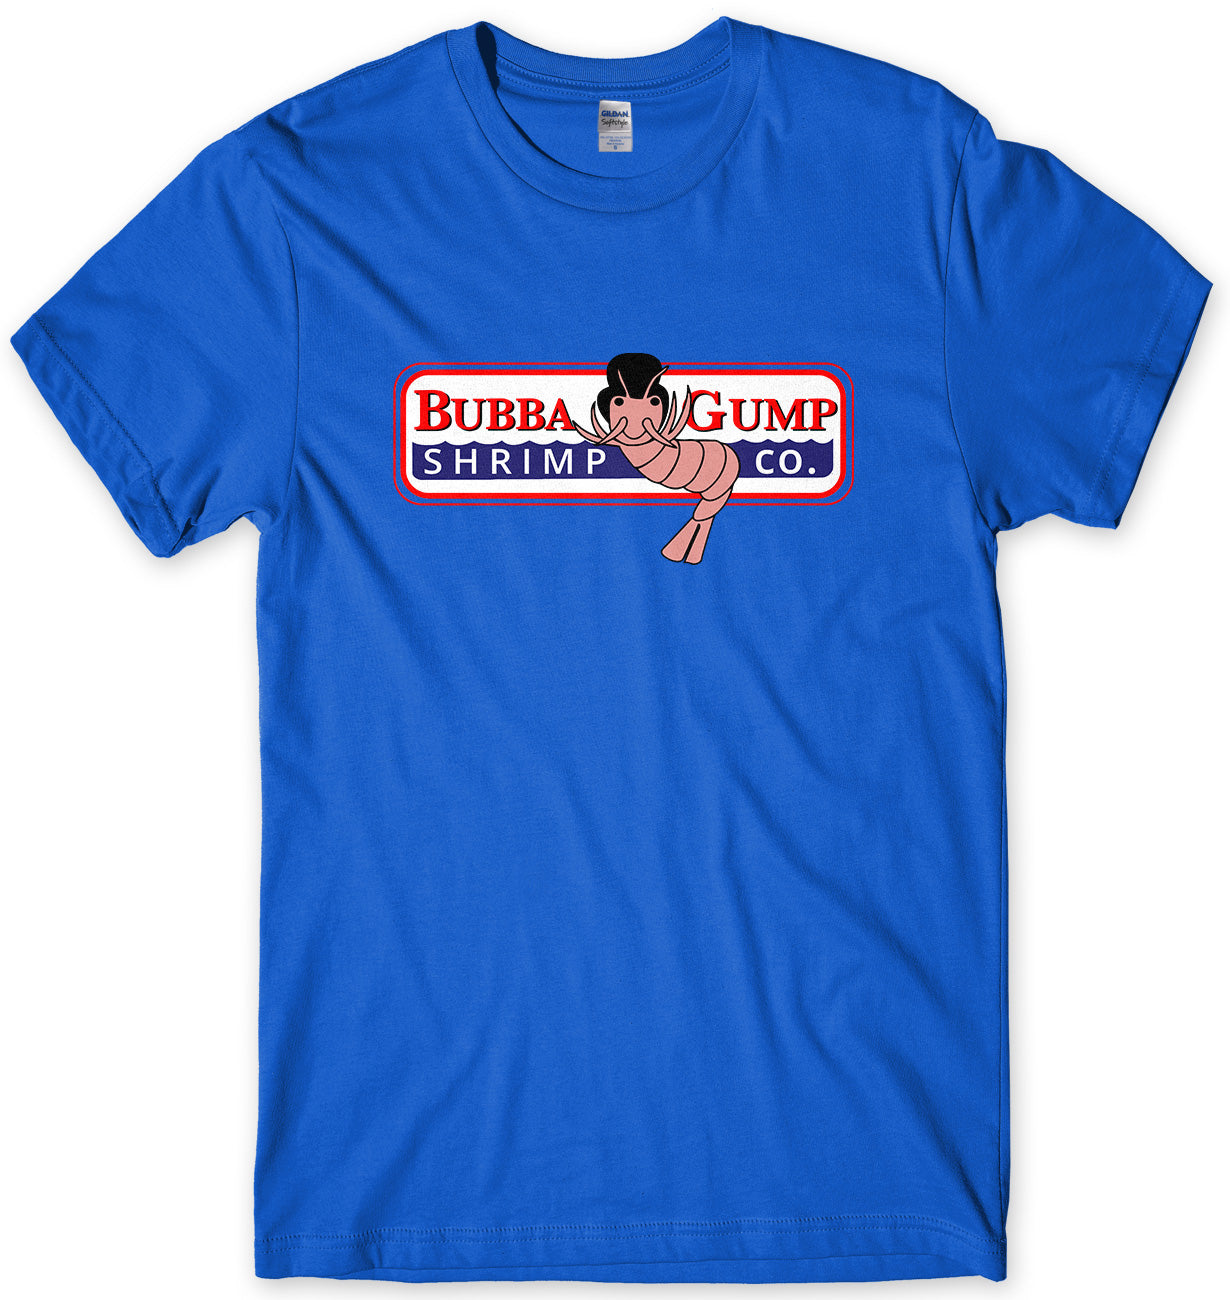 BUBBA GUMP SHRIMP CO. - INSPIRED BY FORREST GUMP MENS UNISEX T-SHIRT